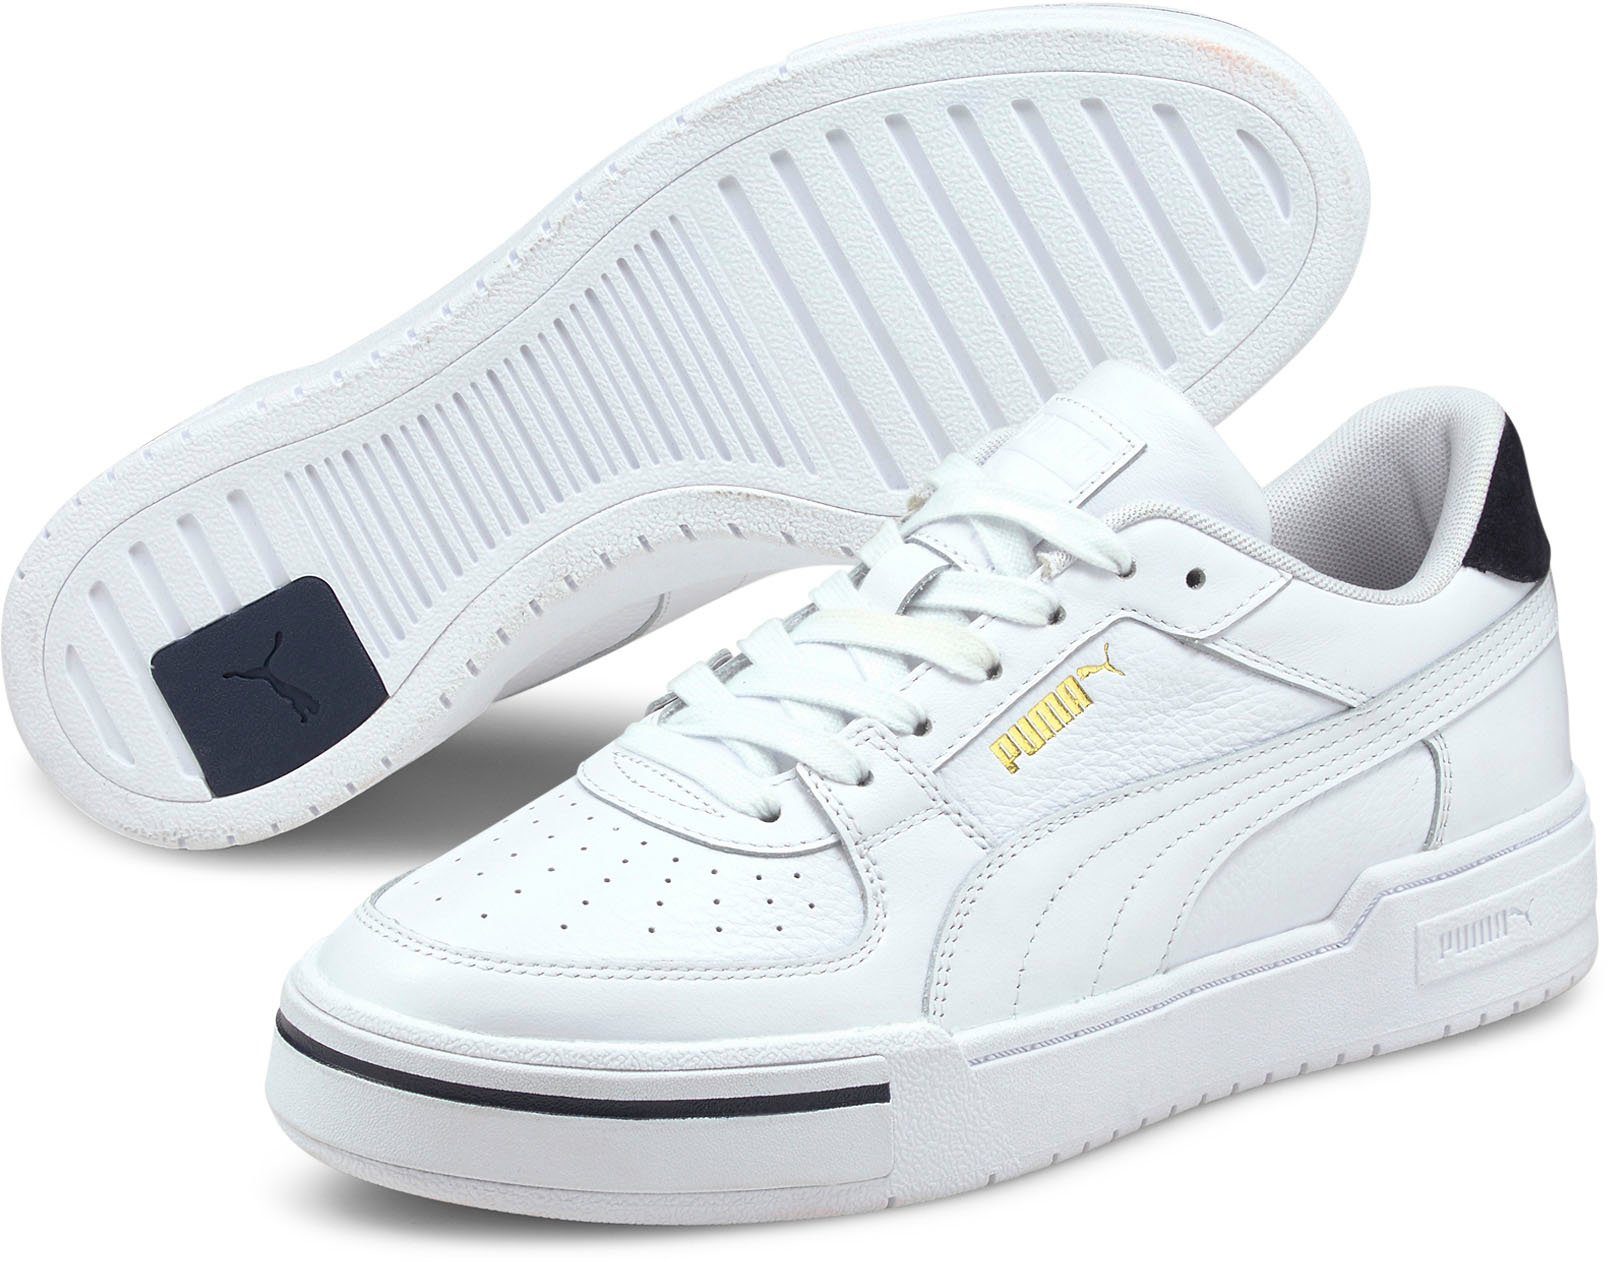 PUMA »CA Pro Heritage« Sneaker online kaufen | OTTO